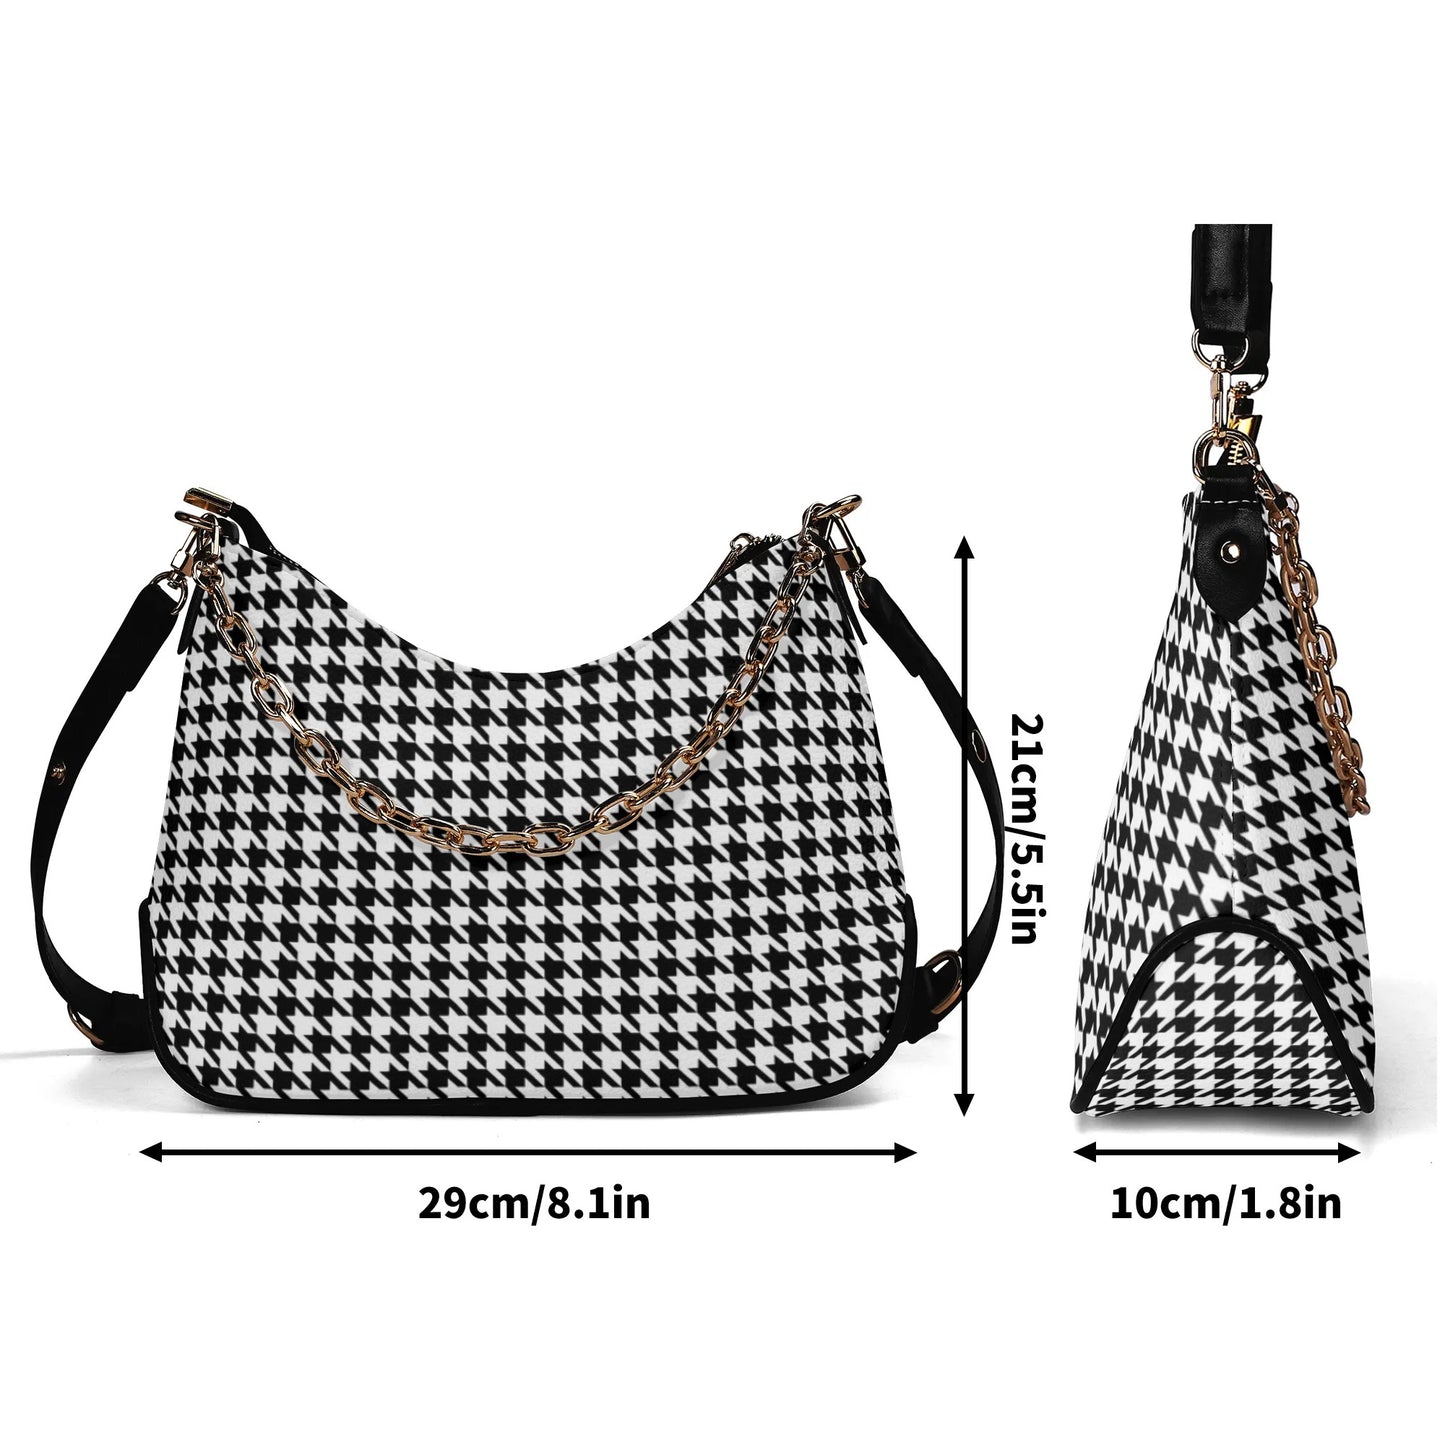 Black Houndstooth Handbag, 60s inspired Houndstooth Purse, Black and White PU Leather Handbag, 60s purse style, Retro Handbag, Retro Purse